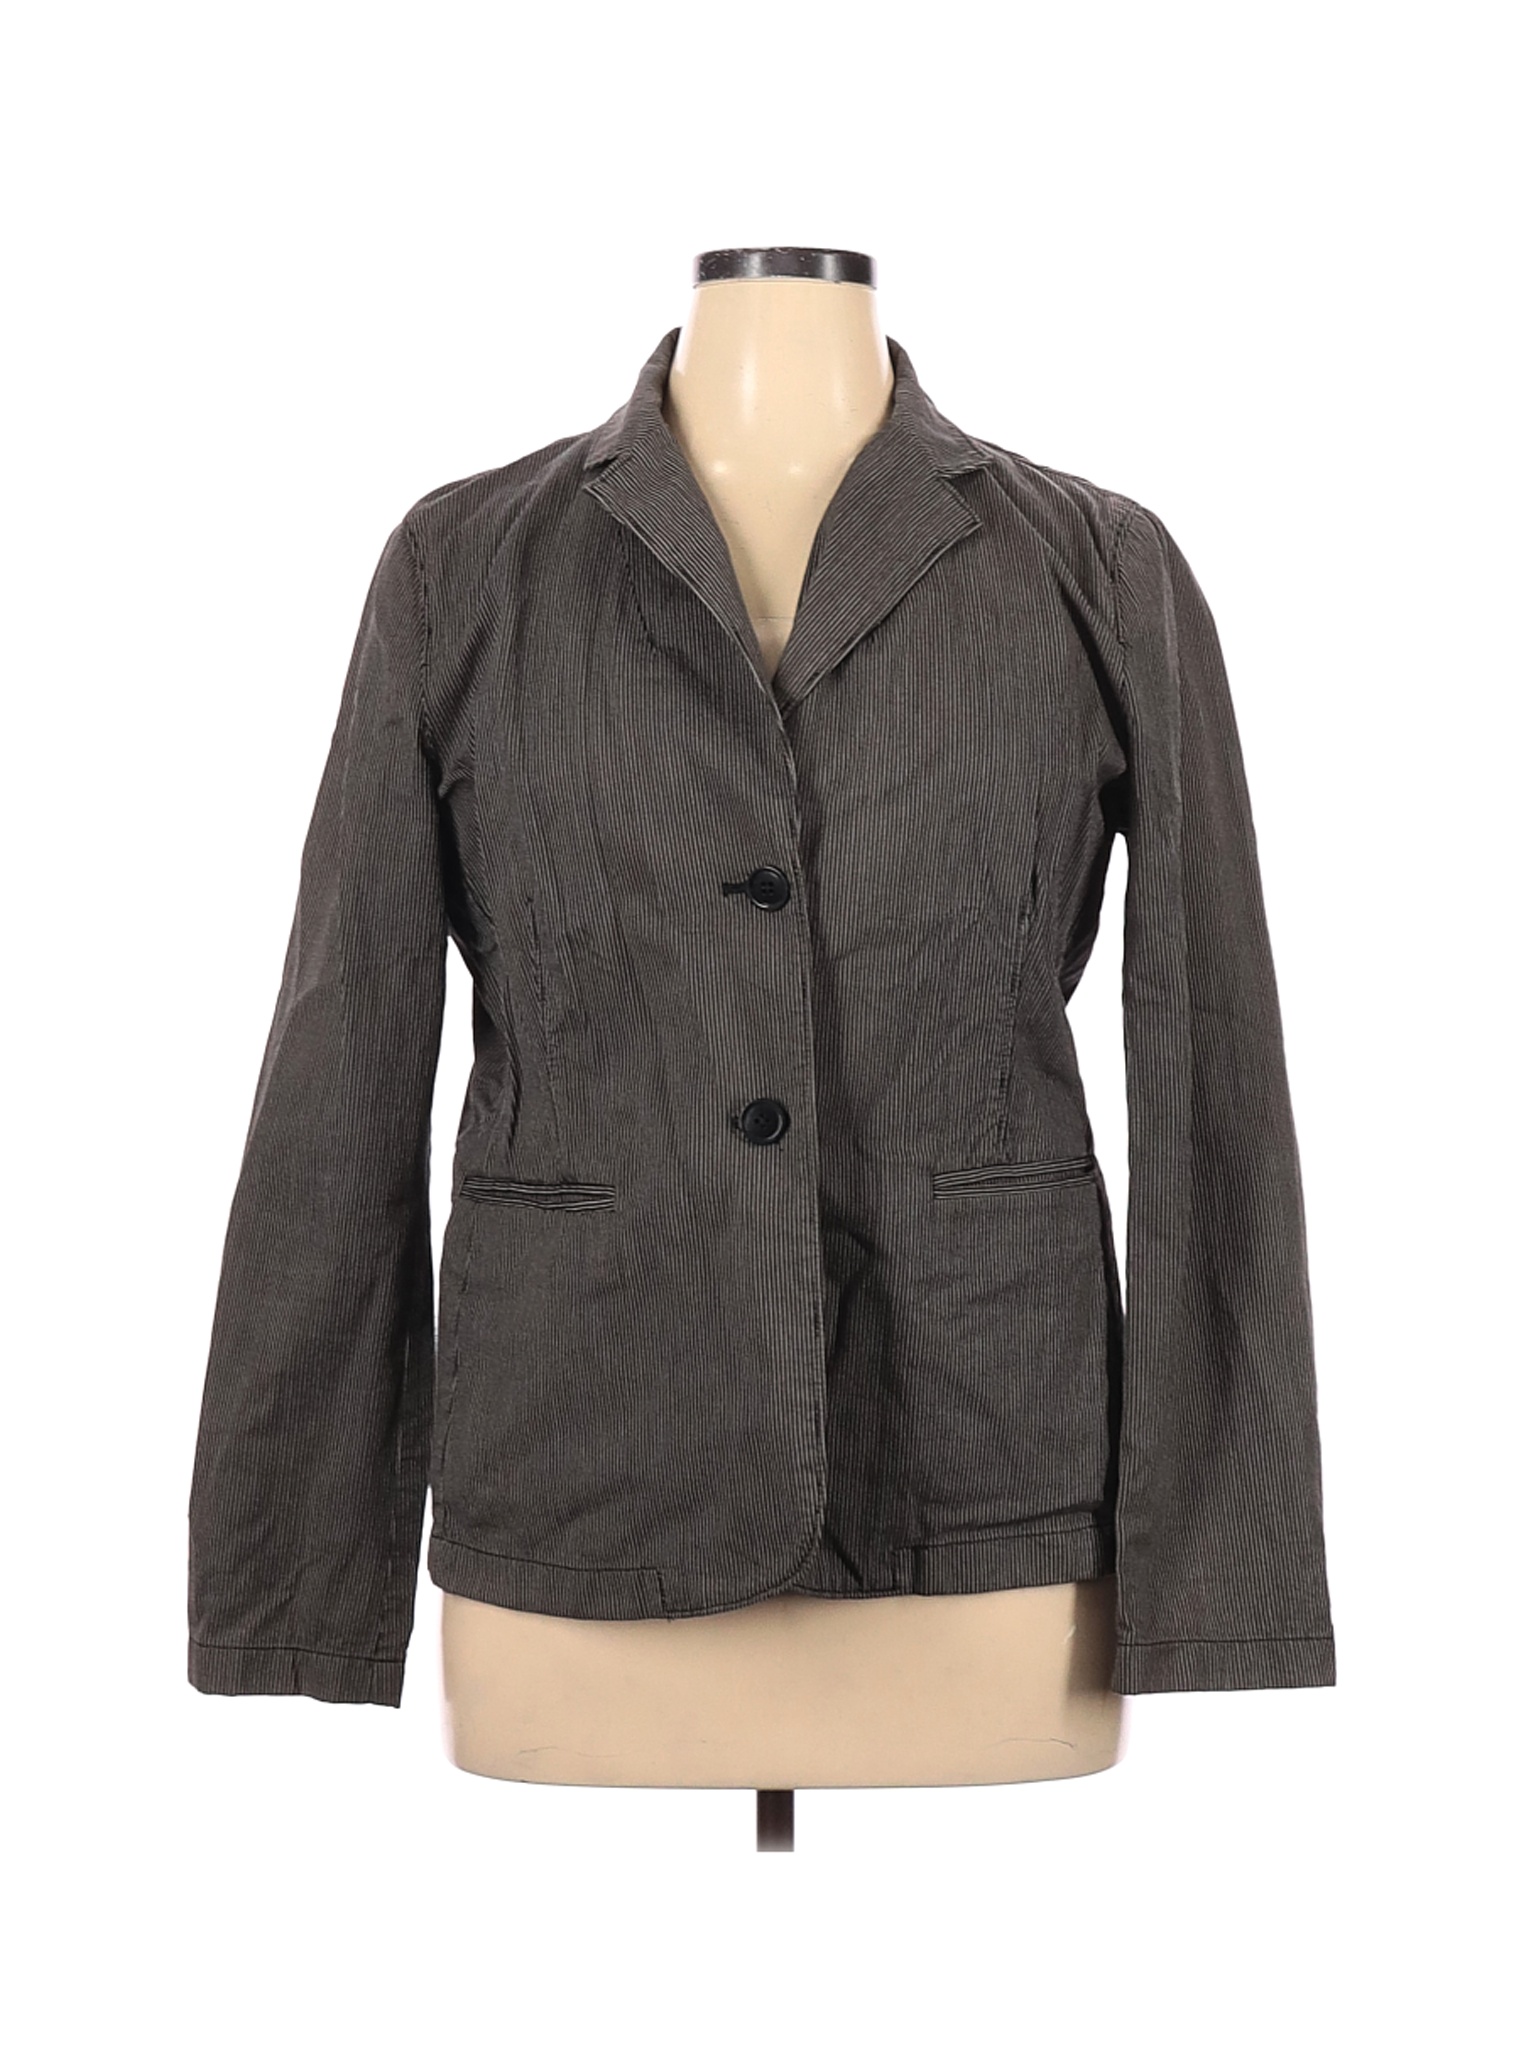 Gap Women Gray Jacket 16 | eBay